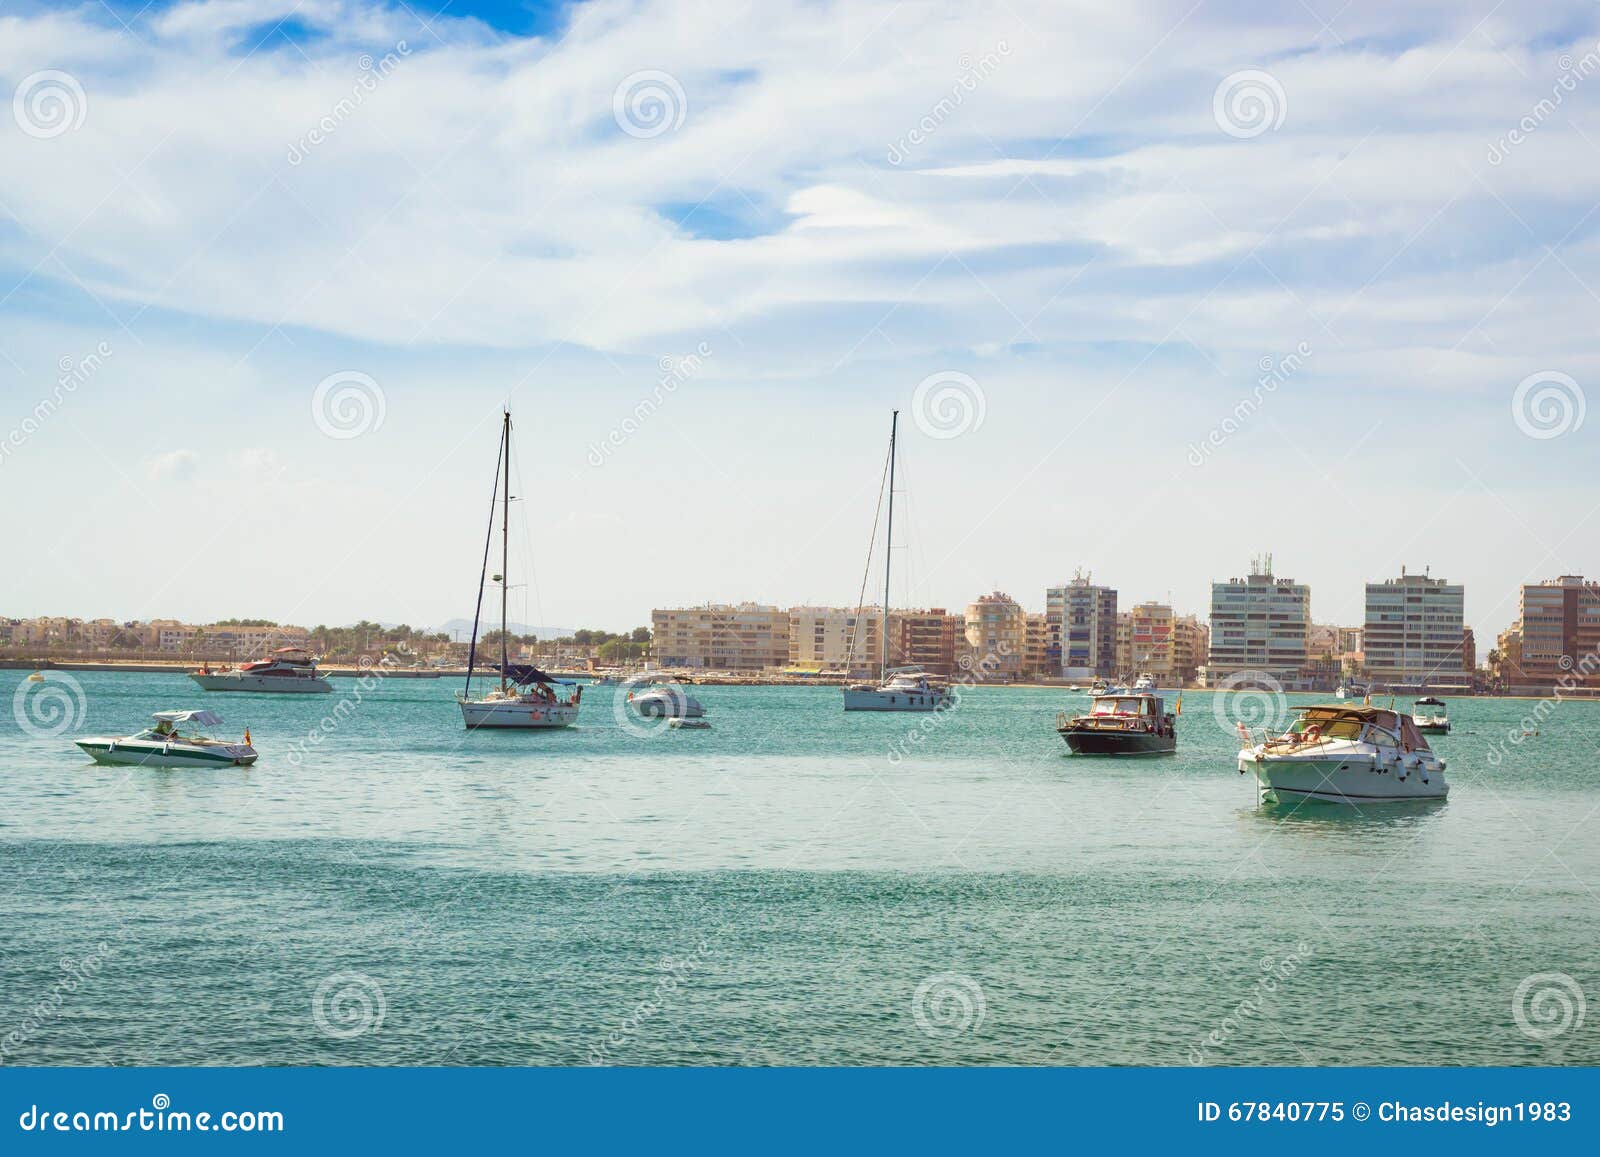 puerto deportivo marina salinas. yachts and boats in marina of t